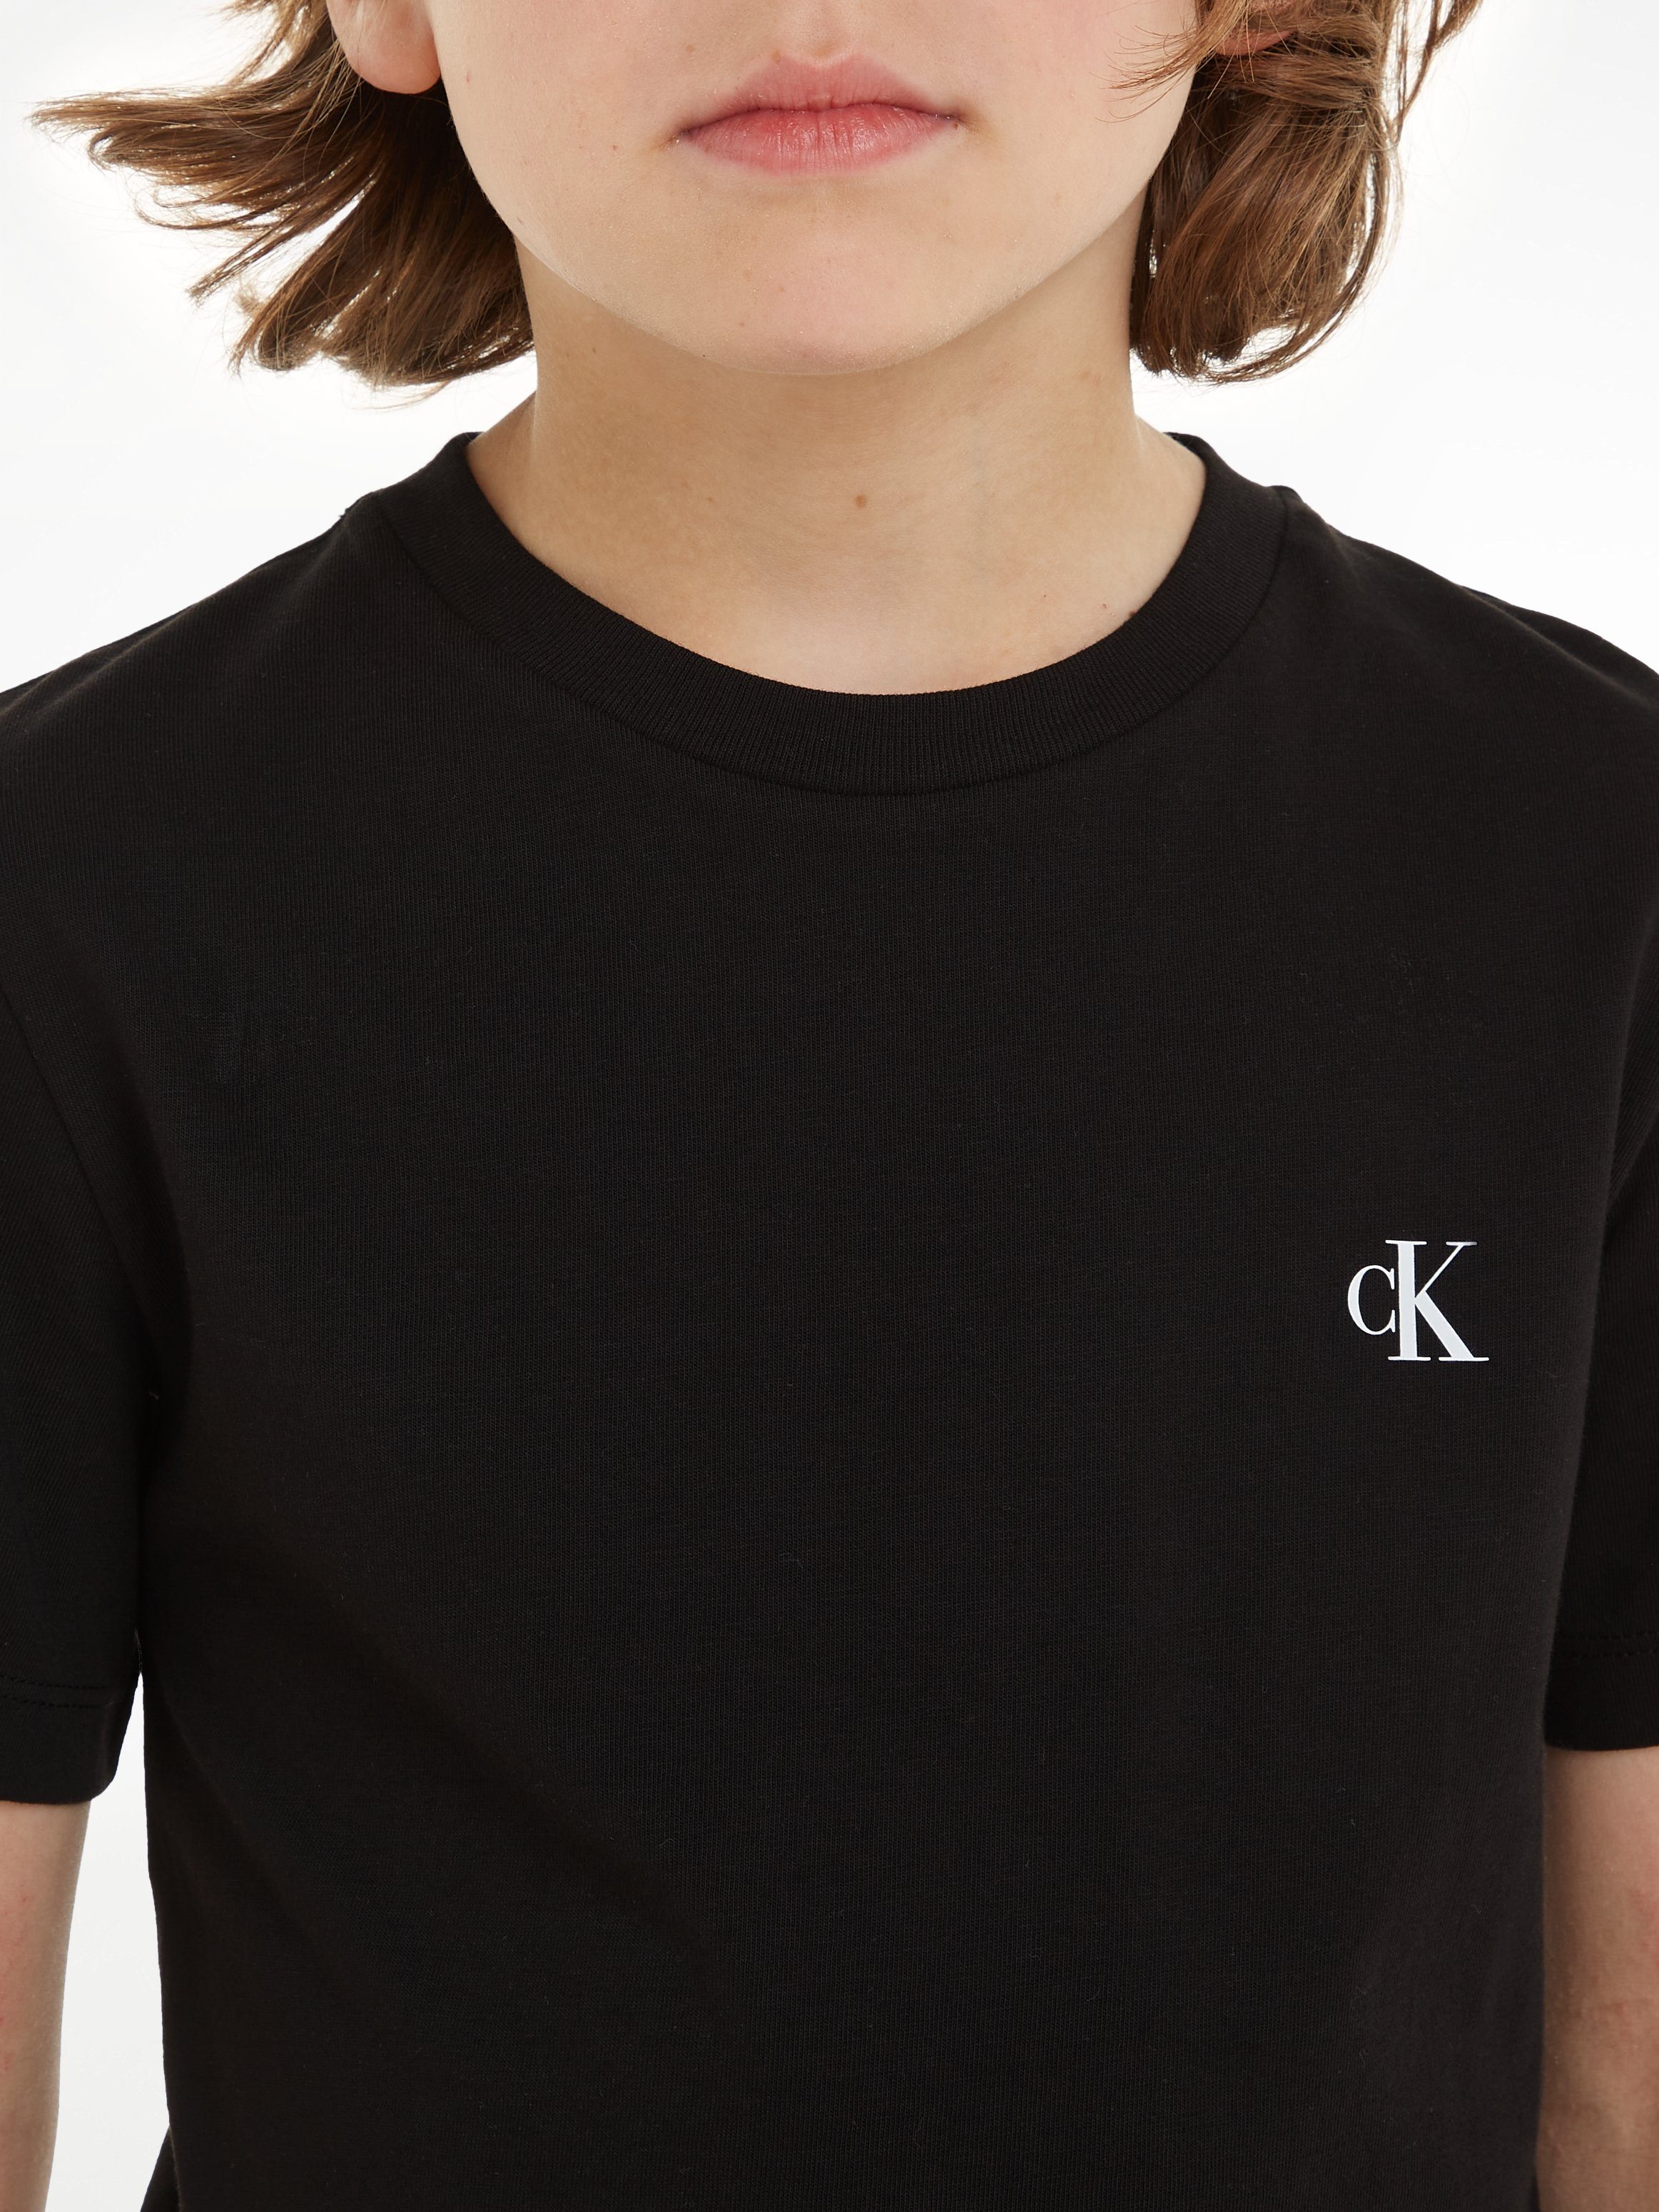 Calvin Klein Jeans T-Shirt 2-PACK Keepsake Black TOP mit Logodruck Blue Ck / MONOGRAM